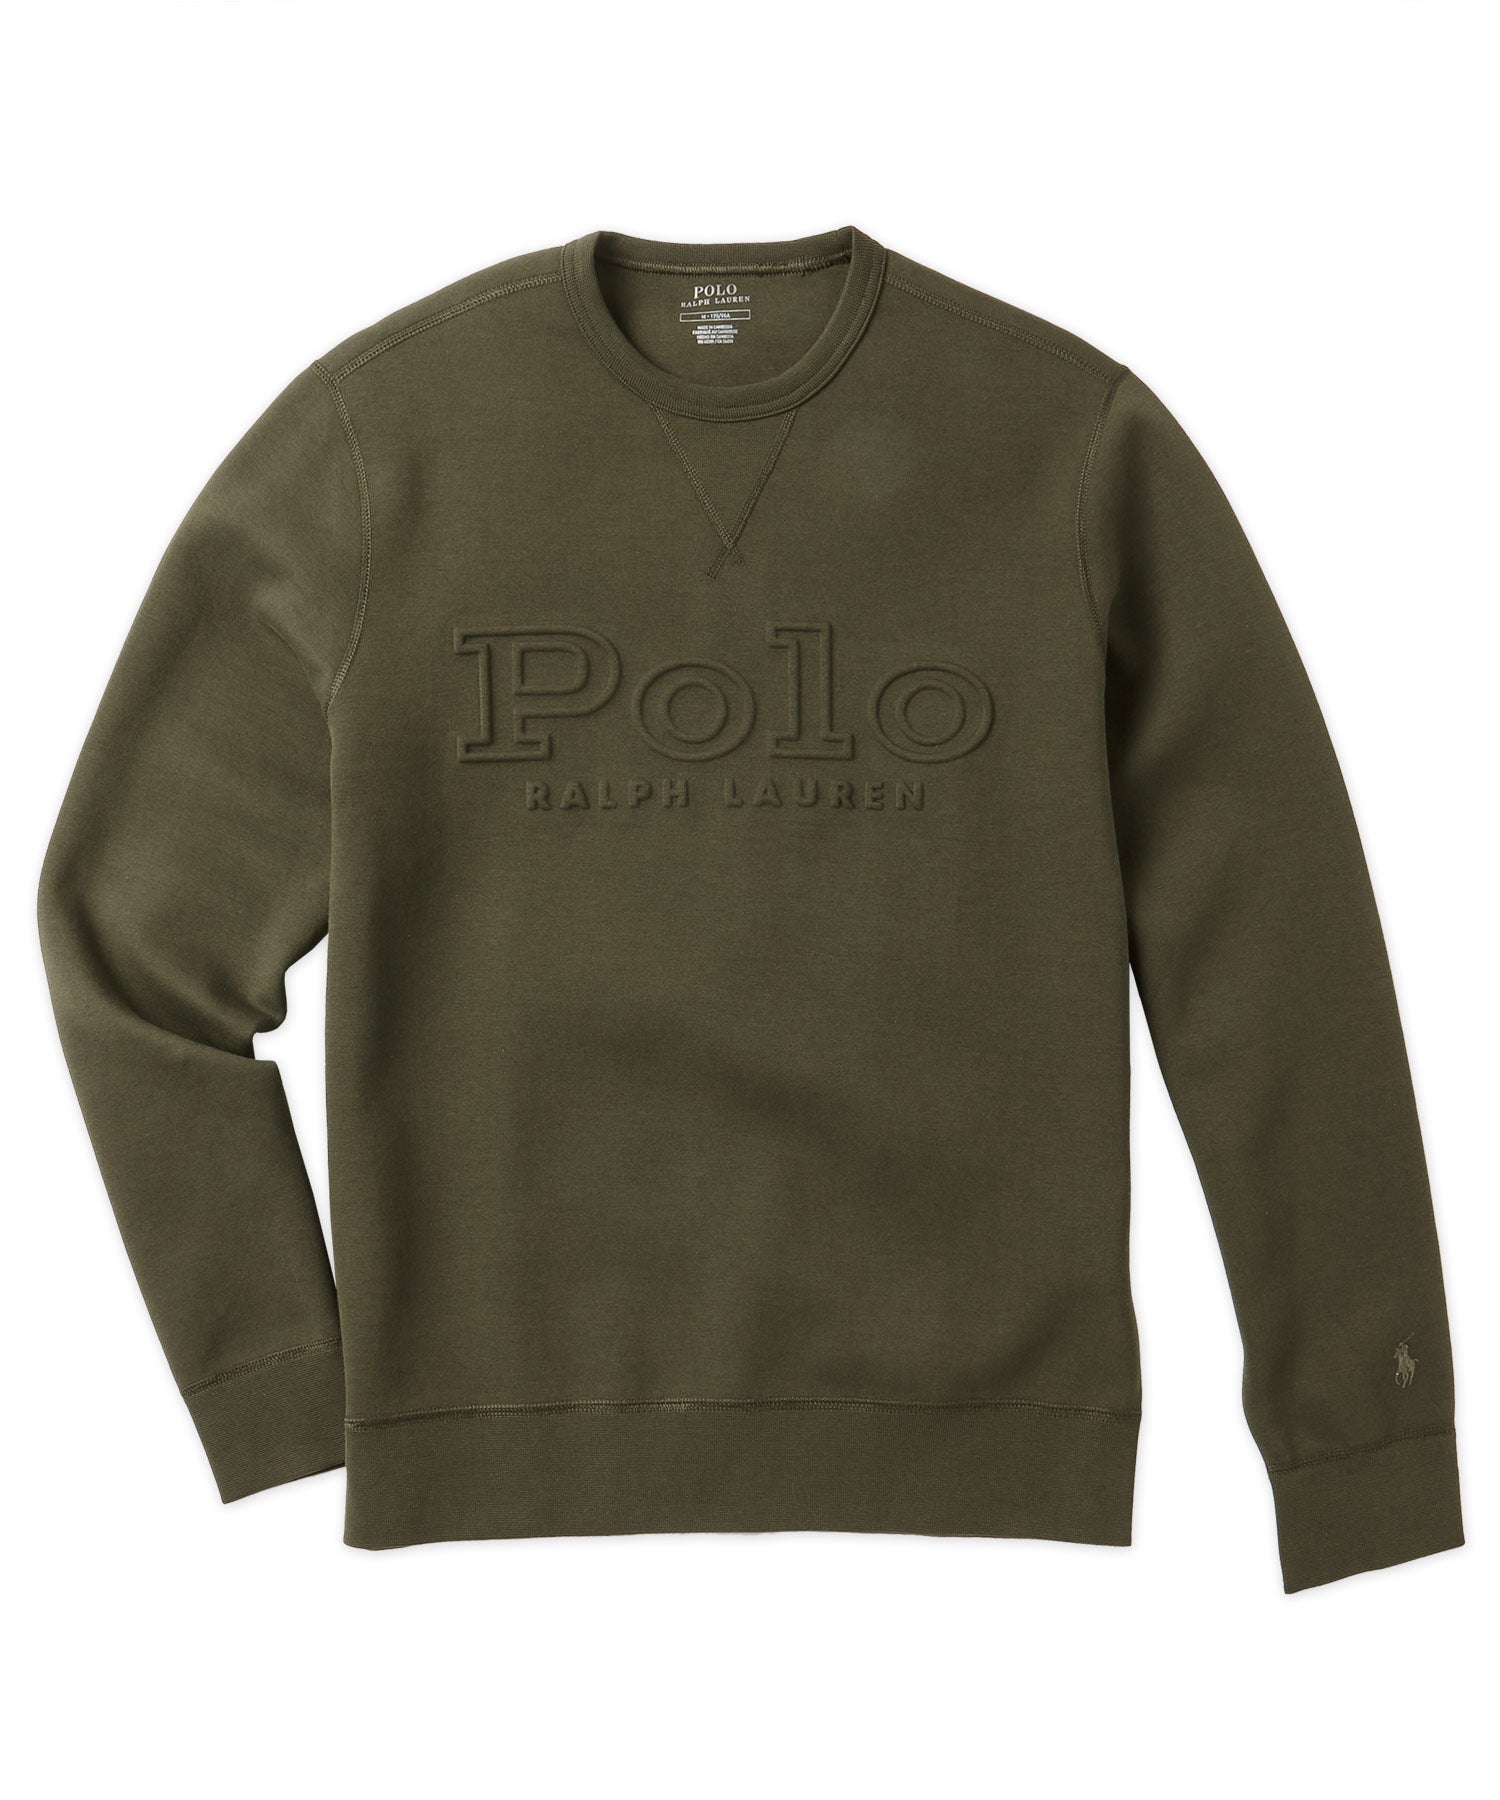 Polo Ralph Lauren Long-Sleeve Crew Neck